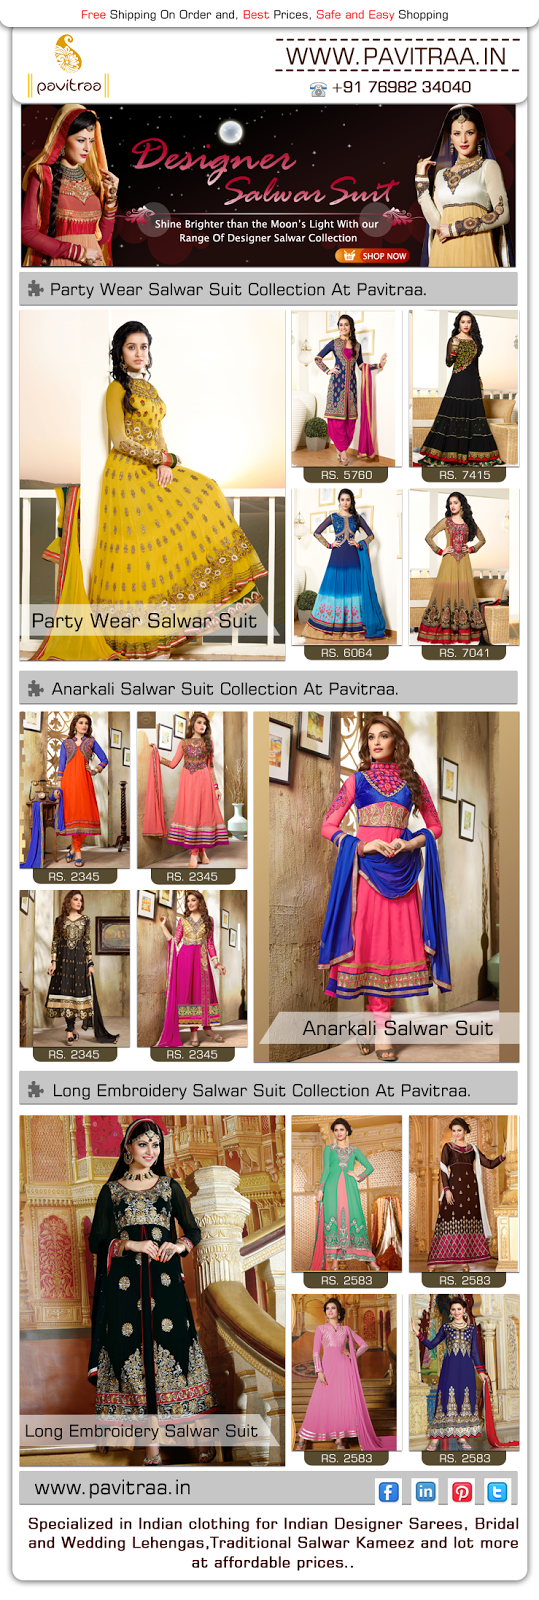 http://www.pavitraa.in/store/dresses/